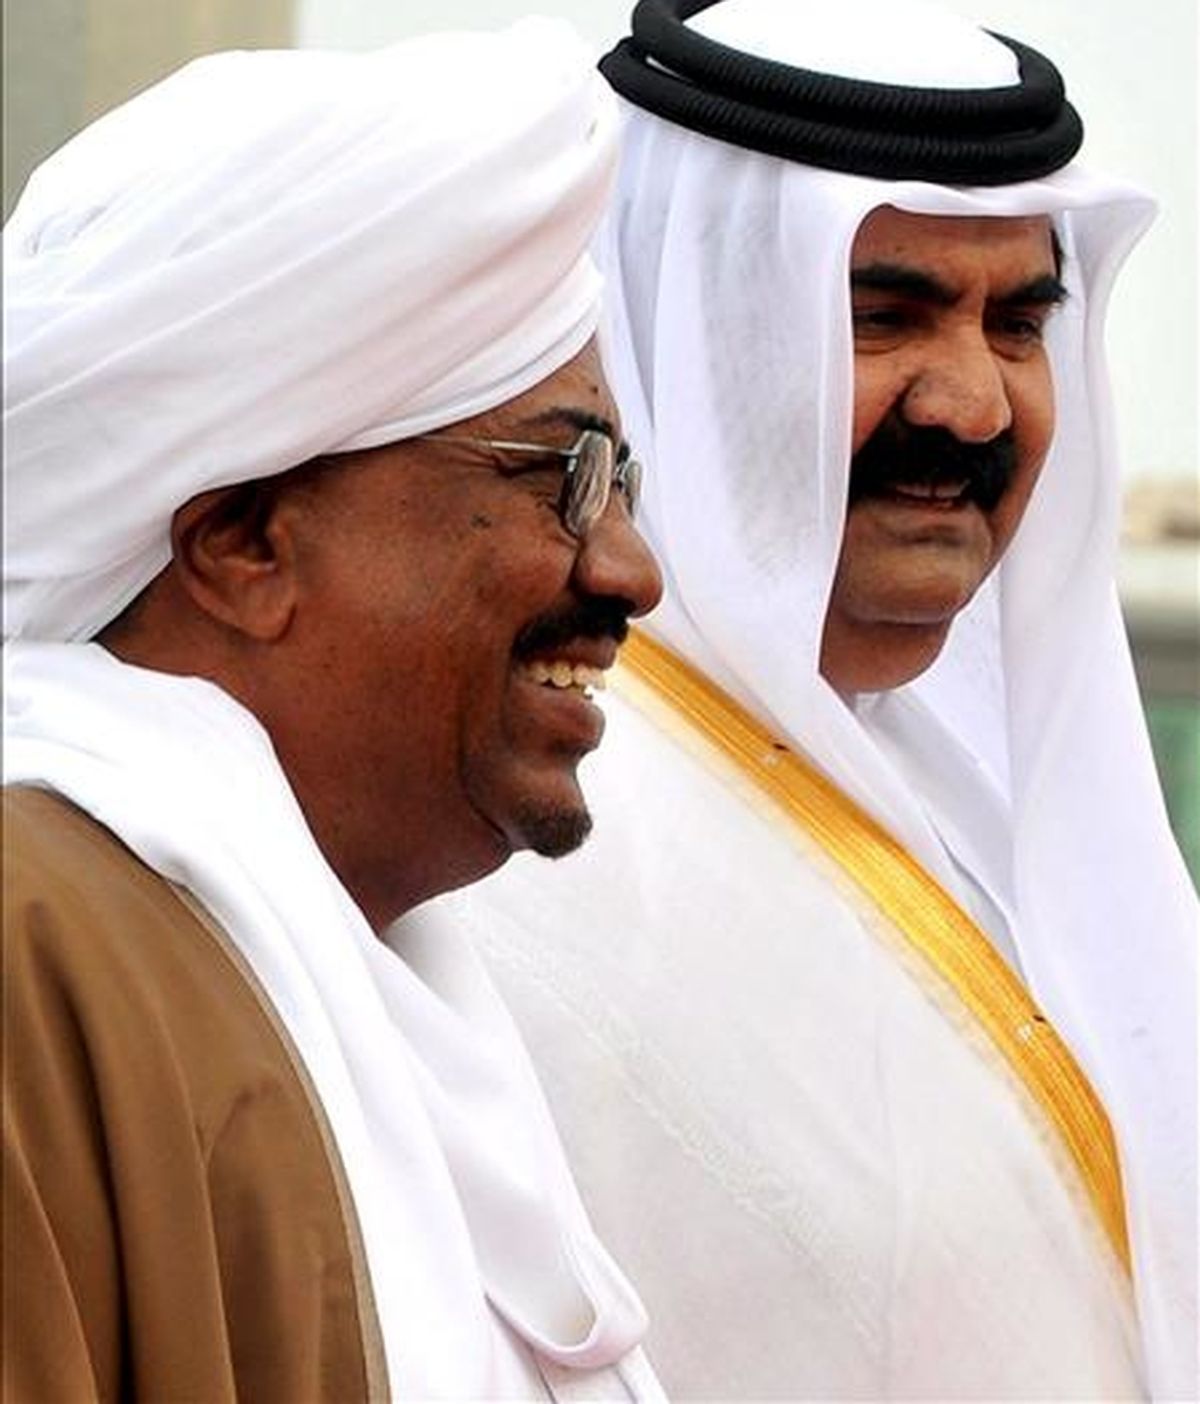 El emir de Qatar, Sheik Hamad bin Khalifa Al-Thani (d) recibe al presidente de Sudán, Omar Hassan al-Bashir (i) a su llegada al aeropuerto internacional de Doha en Qatar. Bashir asistirá a la Cumbre de la Liga Árabe que inicia mañana, 30 de marzo. EFE